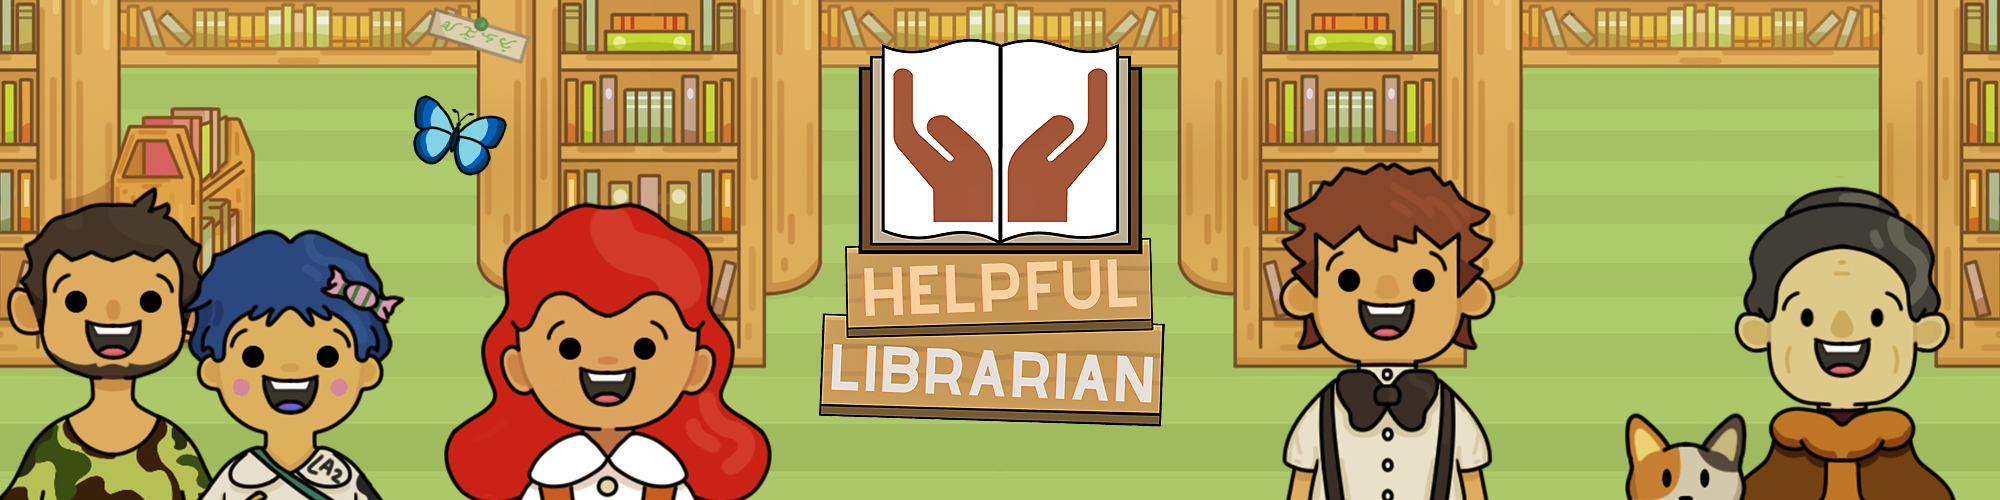 Helpful Librarian